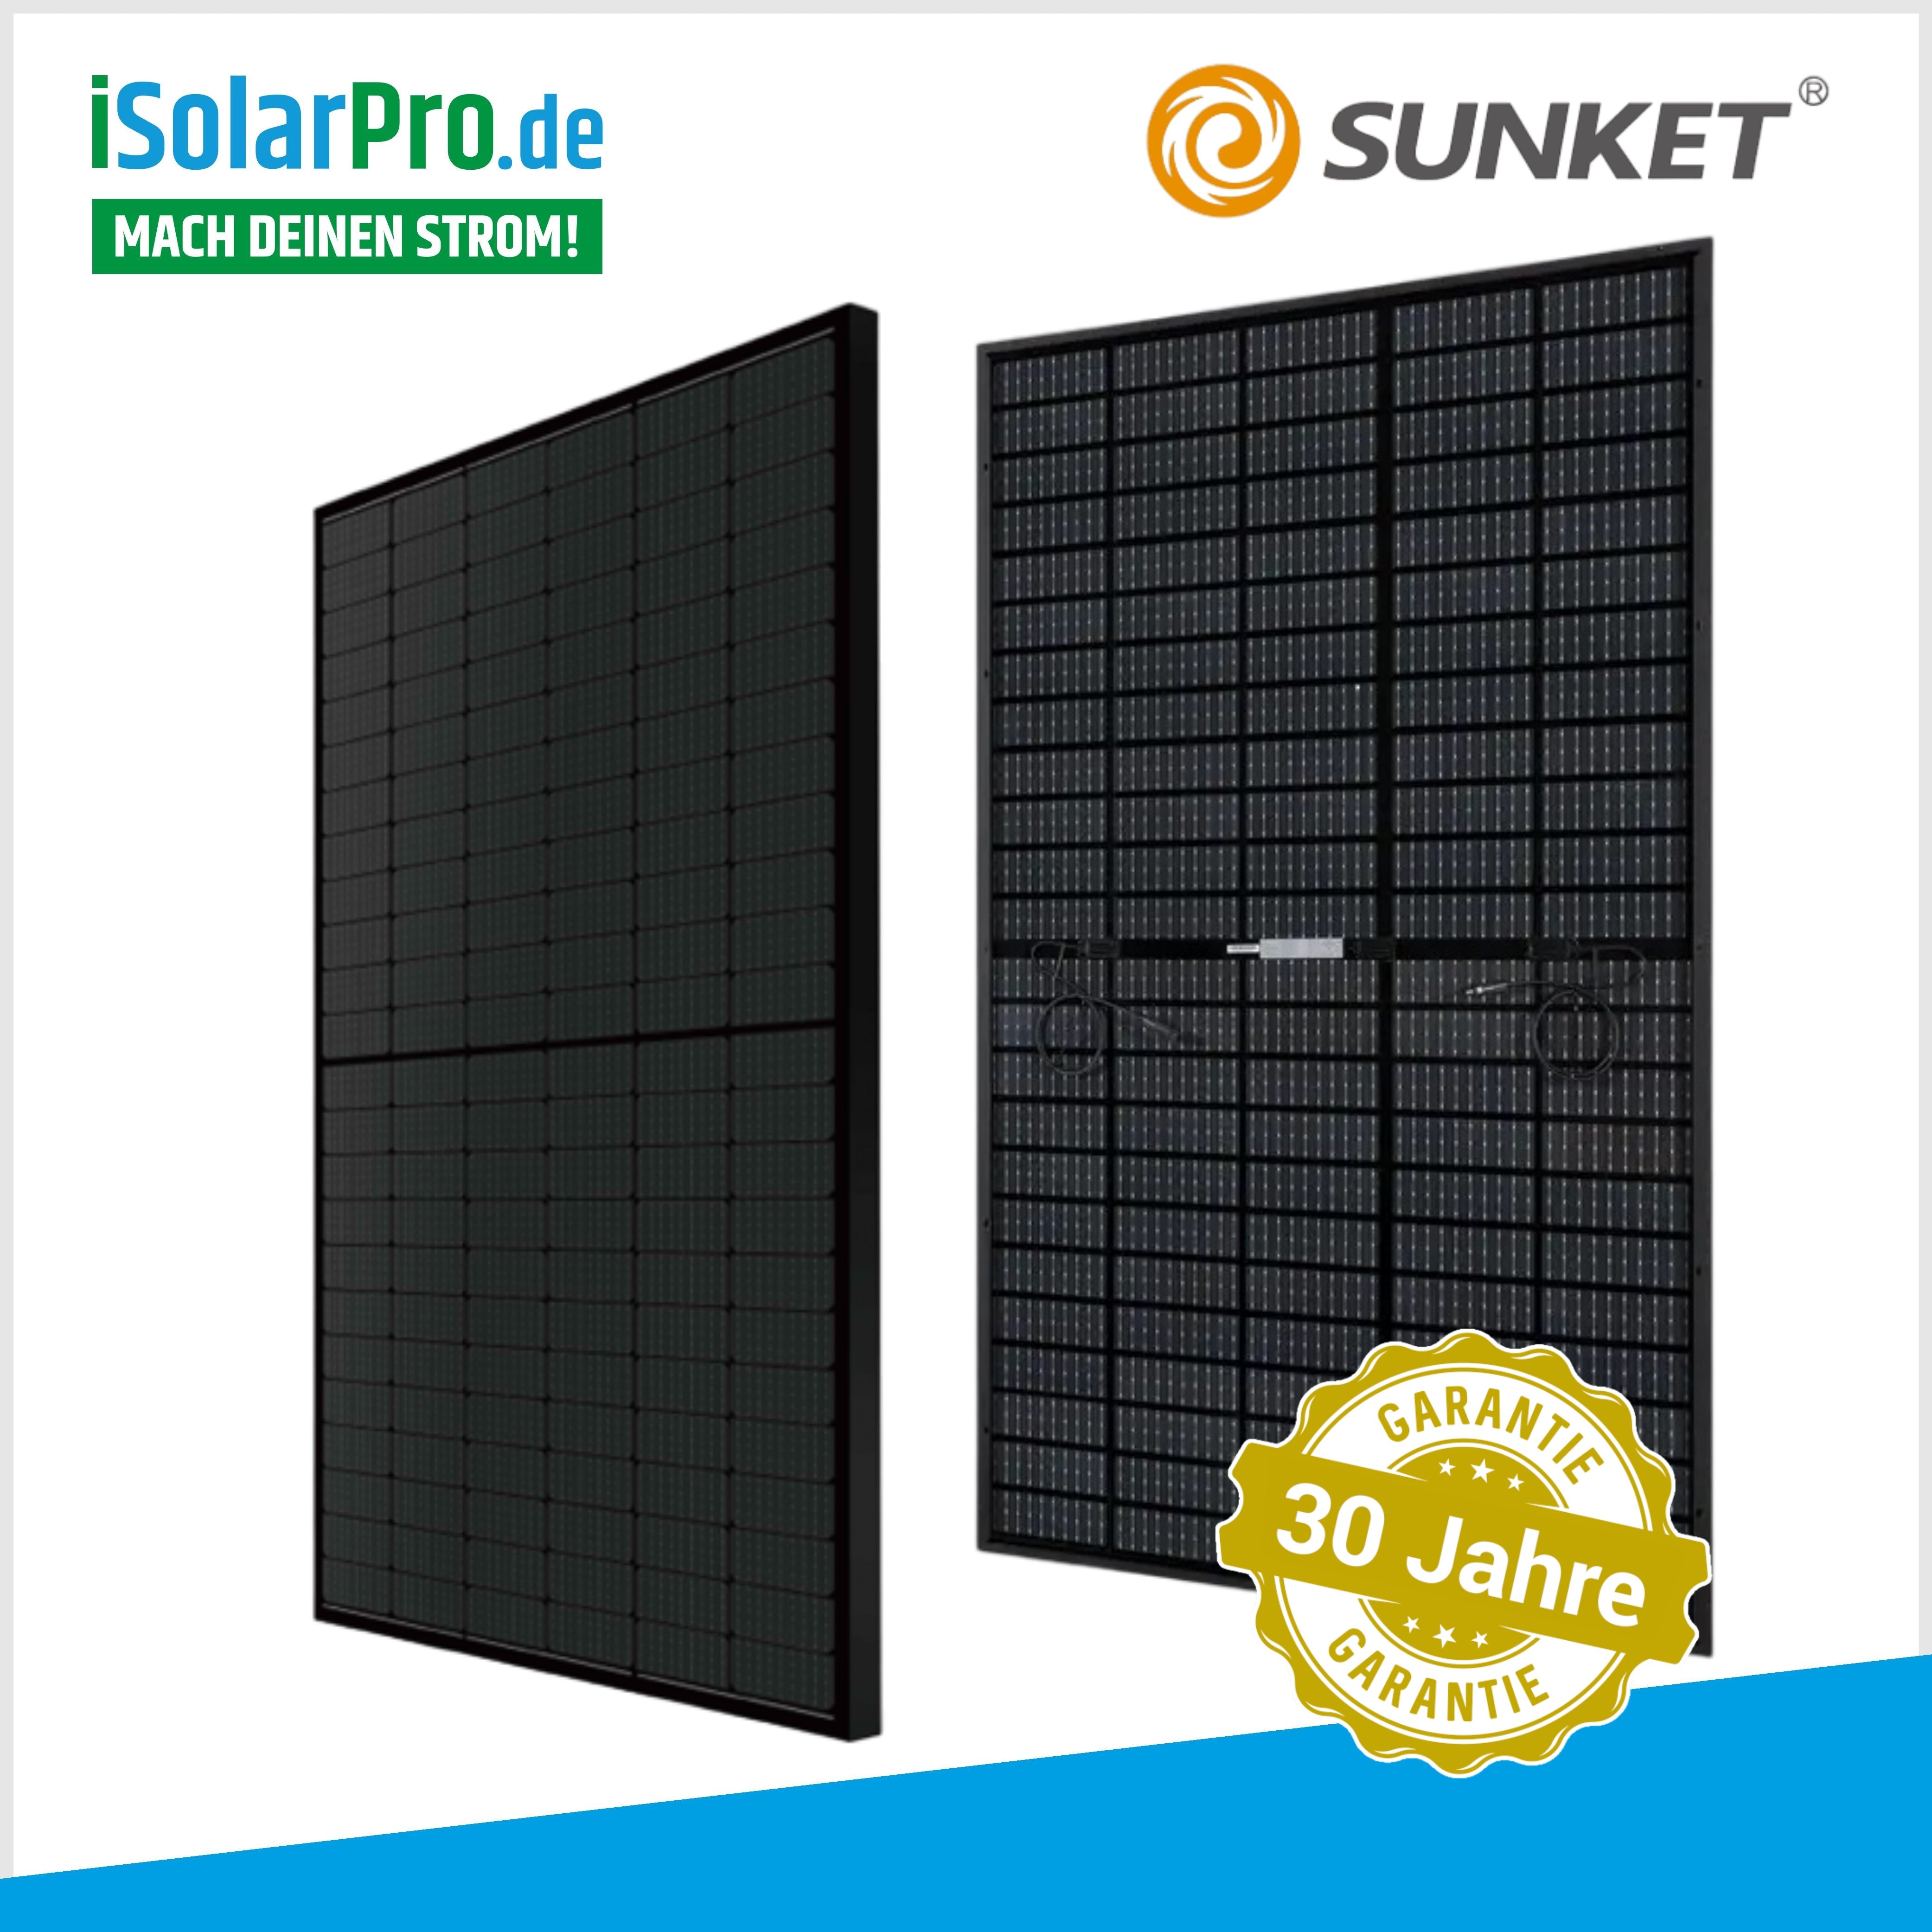 430W SUNKET TOPCon Bifacial N-Type Solarmodule 1722x1134x30 Photovoltaik Solarpanel